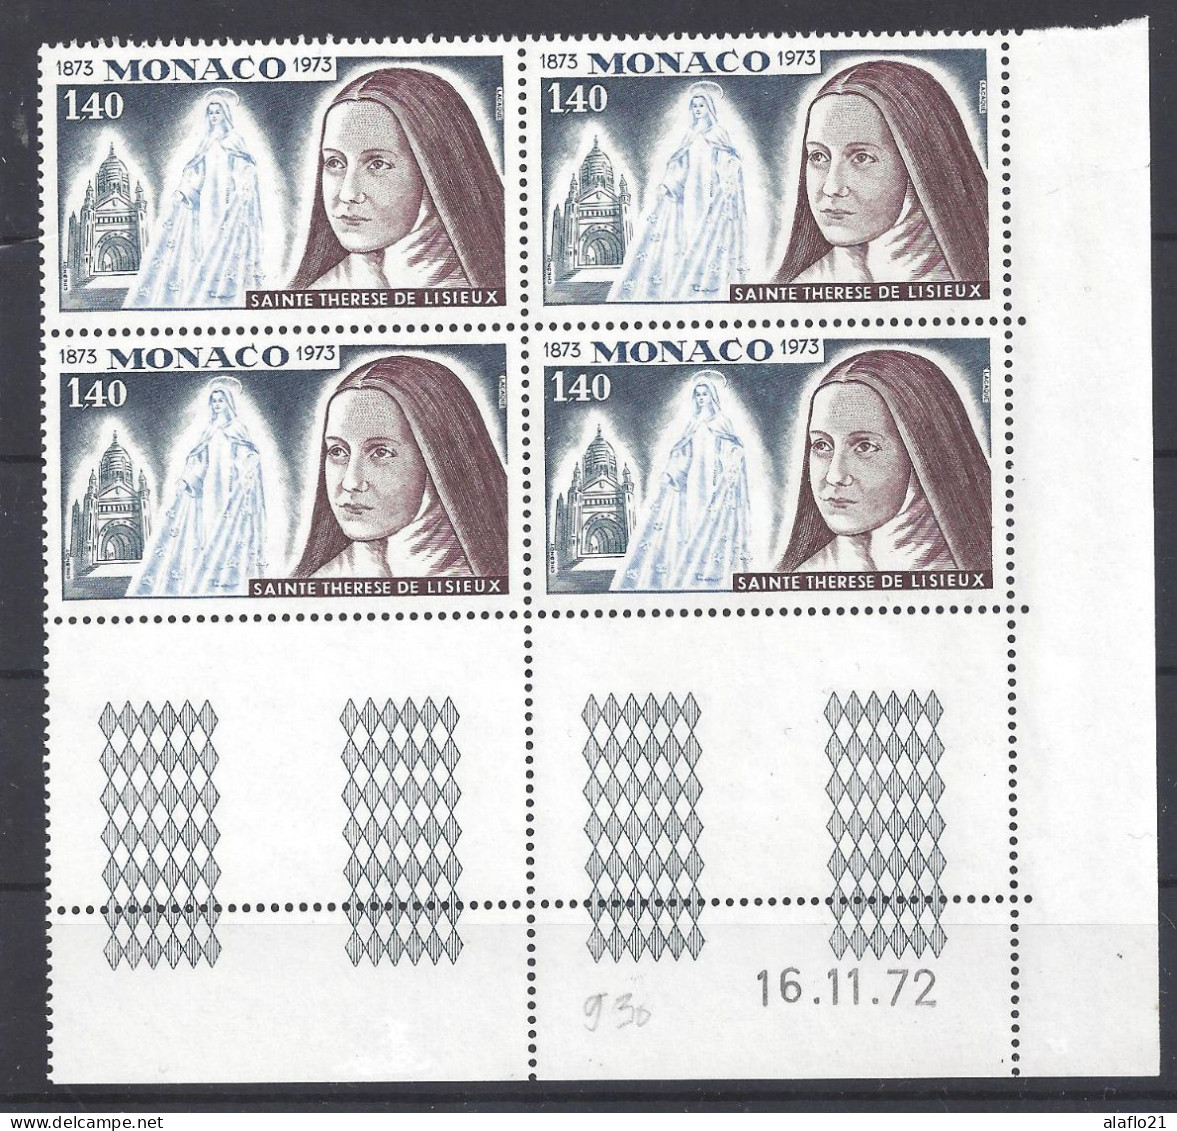 MONACO - N° 930 - STE-THERESE De LISIEUX - Bloc De 4 COIN DATE - NEUF SANS CHARNIERE - 16/11/72 - Unused Stamps